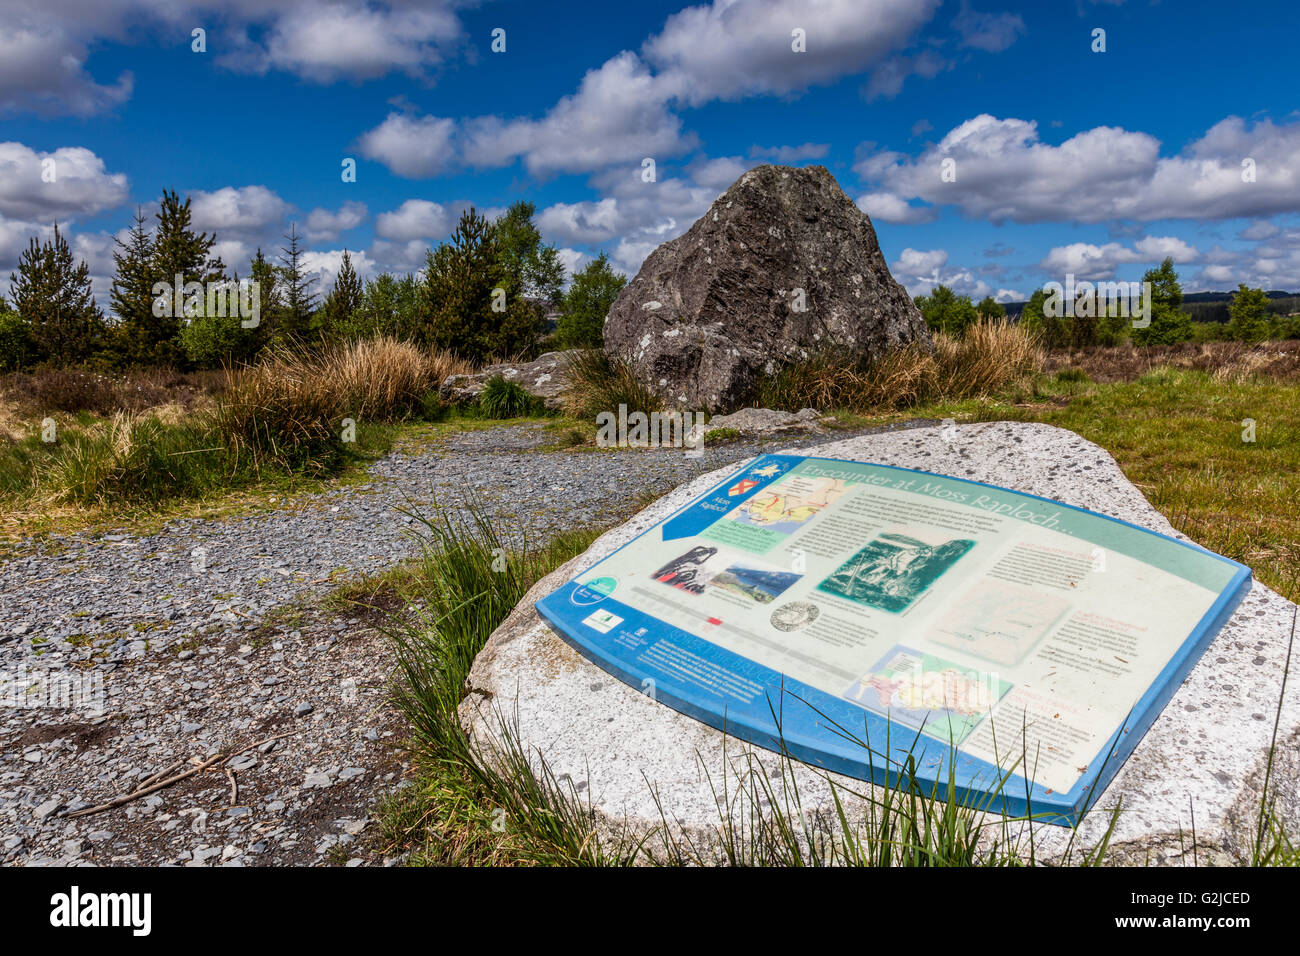 Bruce della pietra, vicino Clatteringhsaws Loch, Galloway Forest Park, Dumfries and Galloway, Scozia Foto Stock